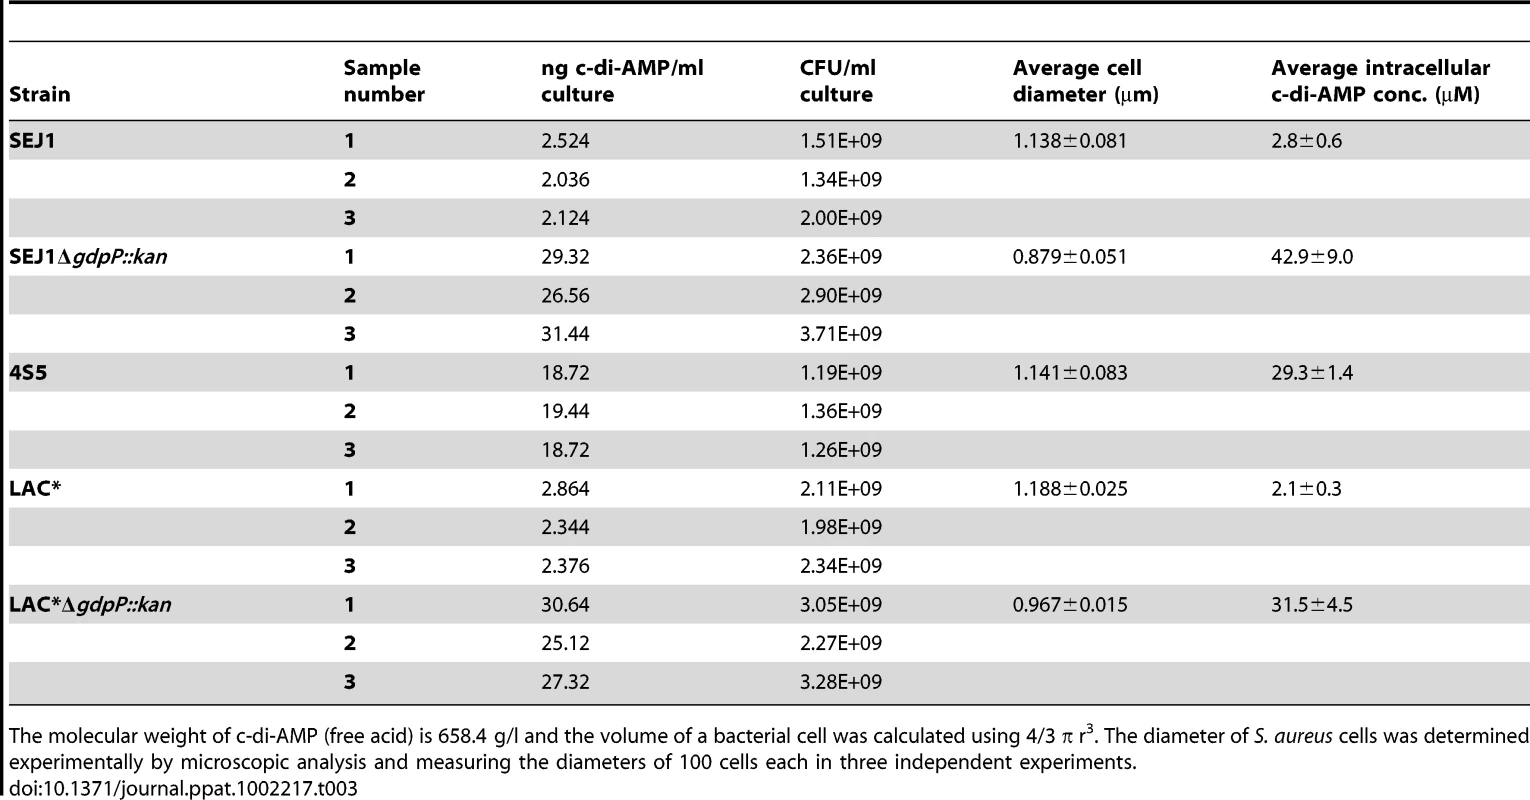 Intracellular c-di-AMP concentration in different <i>S. aureus</i> strains.